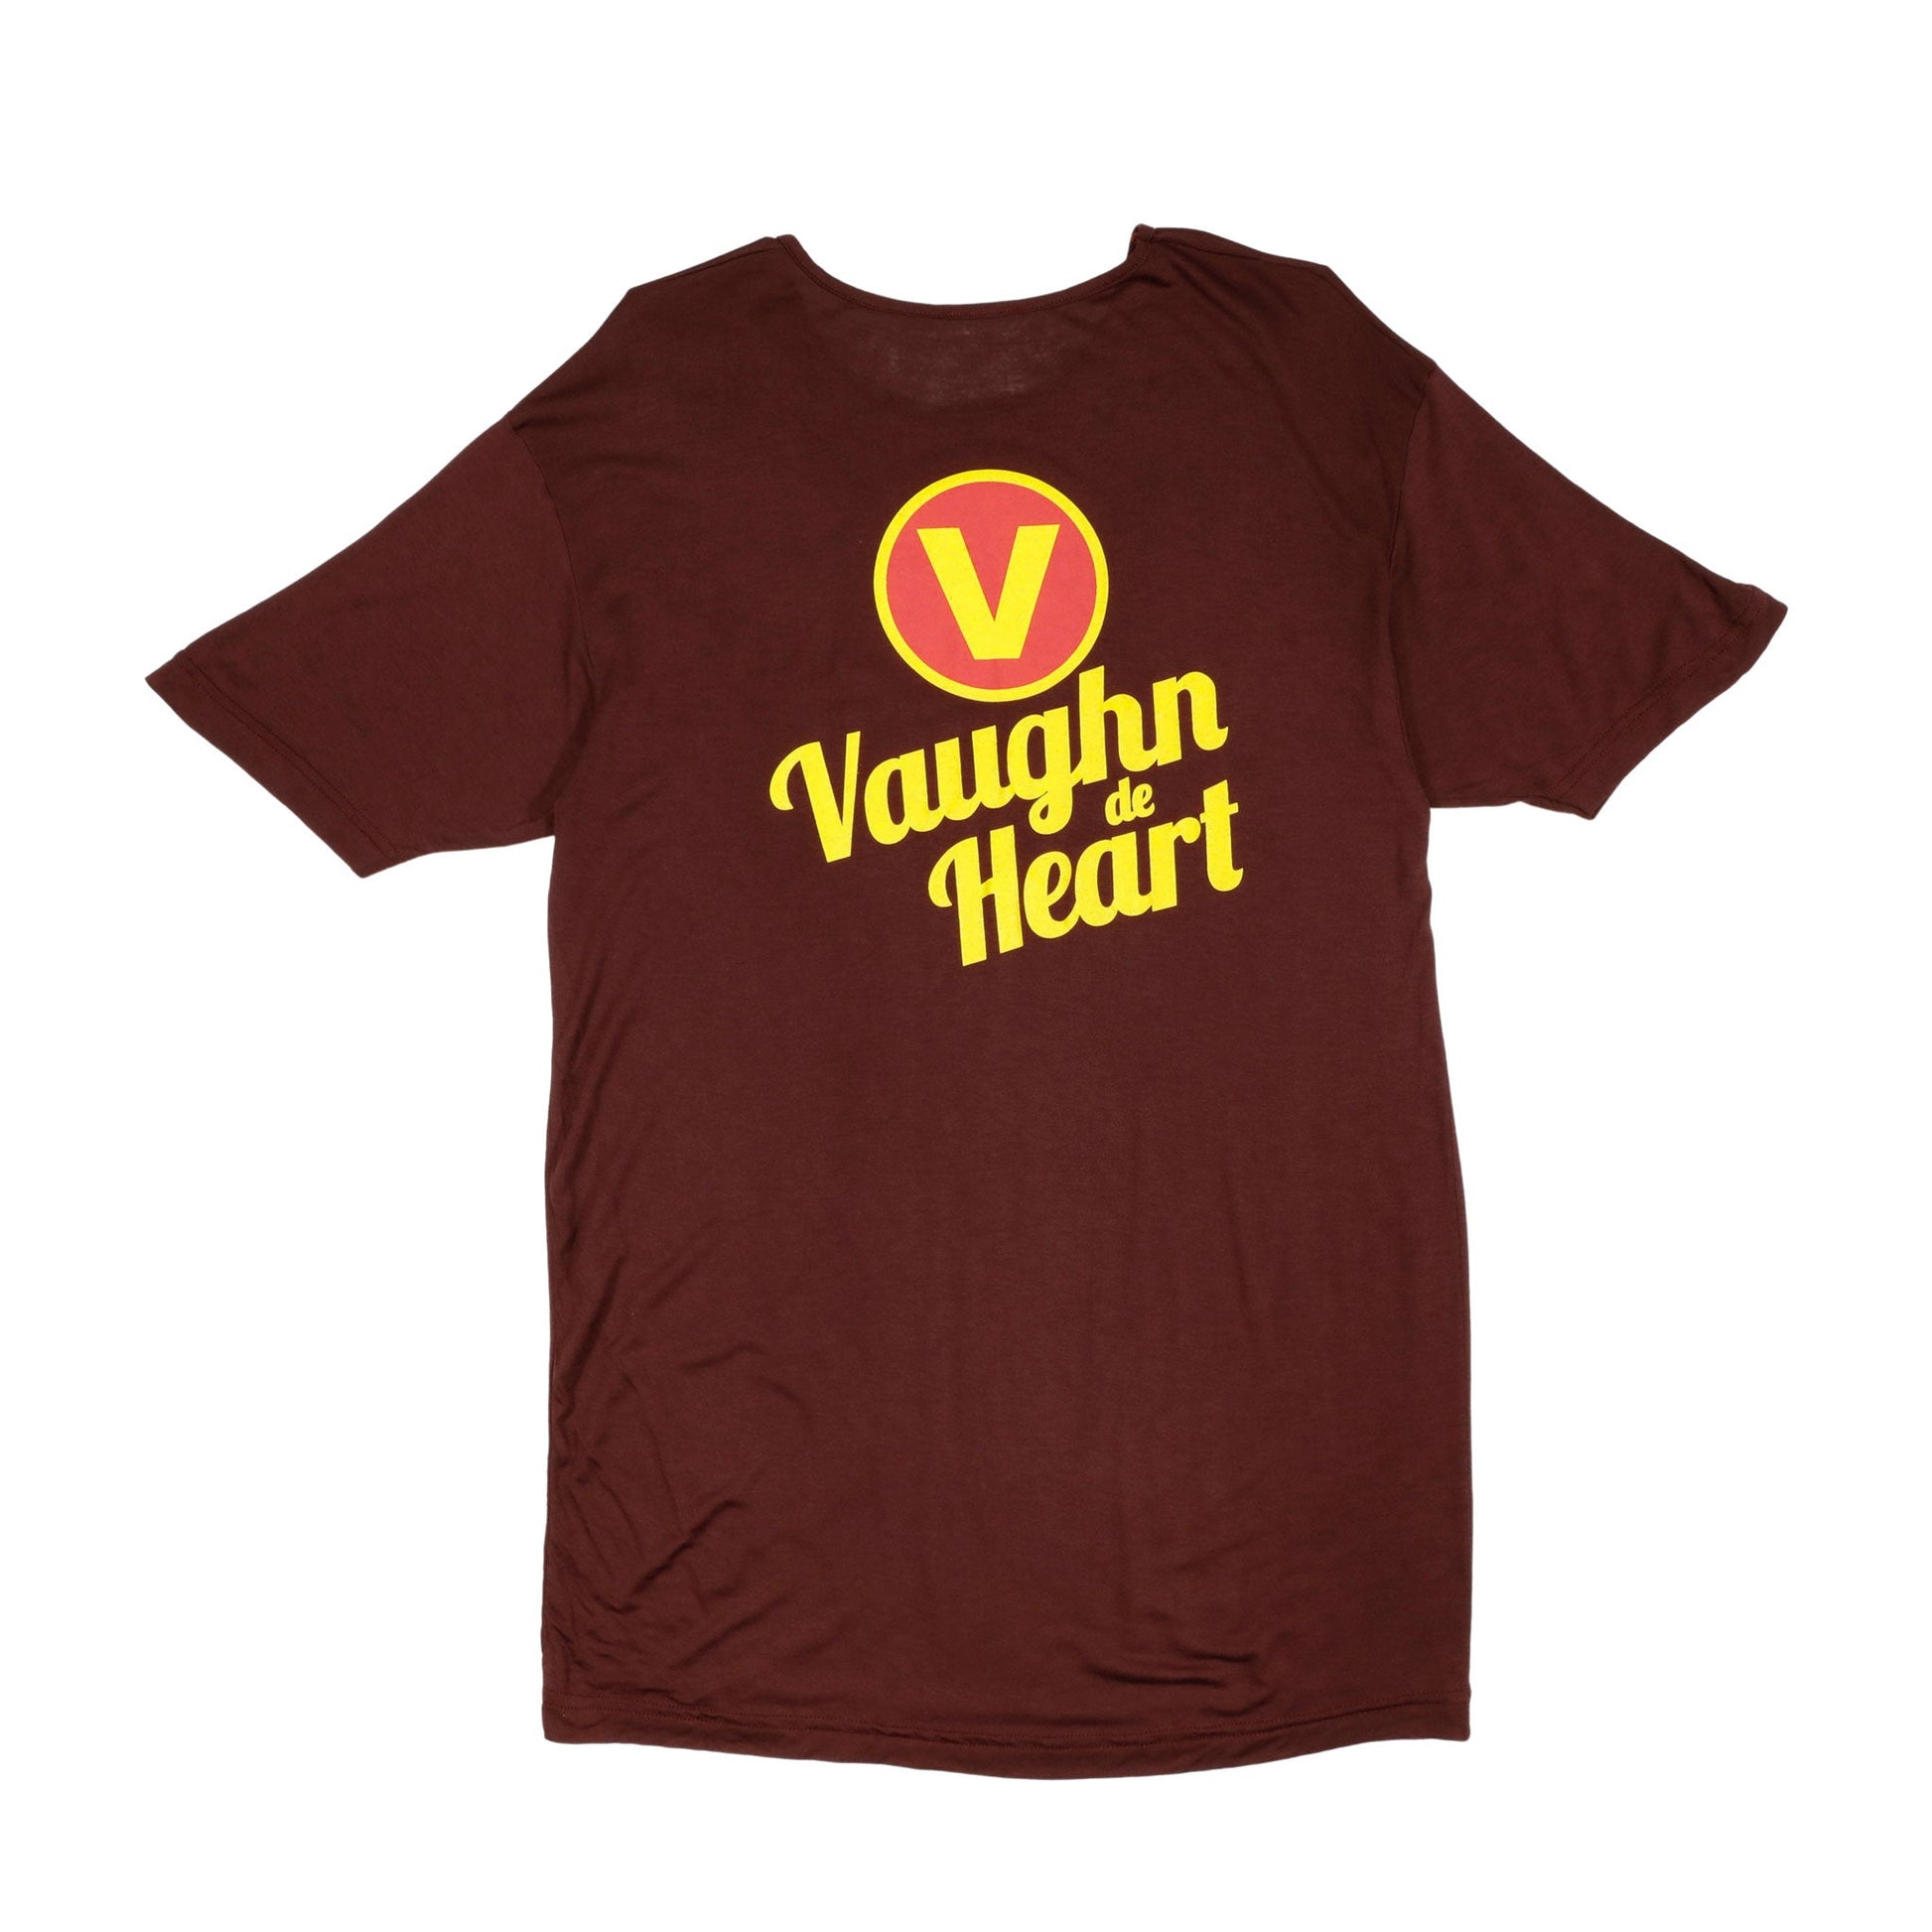 Women's Retro Logo Maroon Crew Neck T-Shirt-Vaughn de Heart